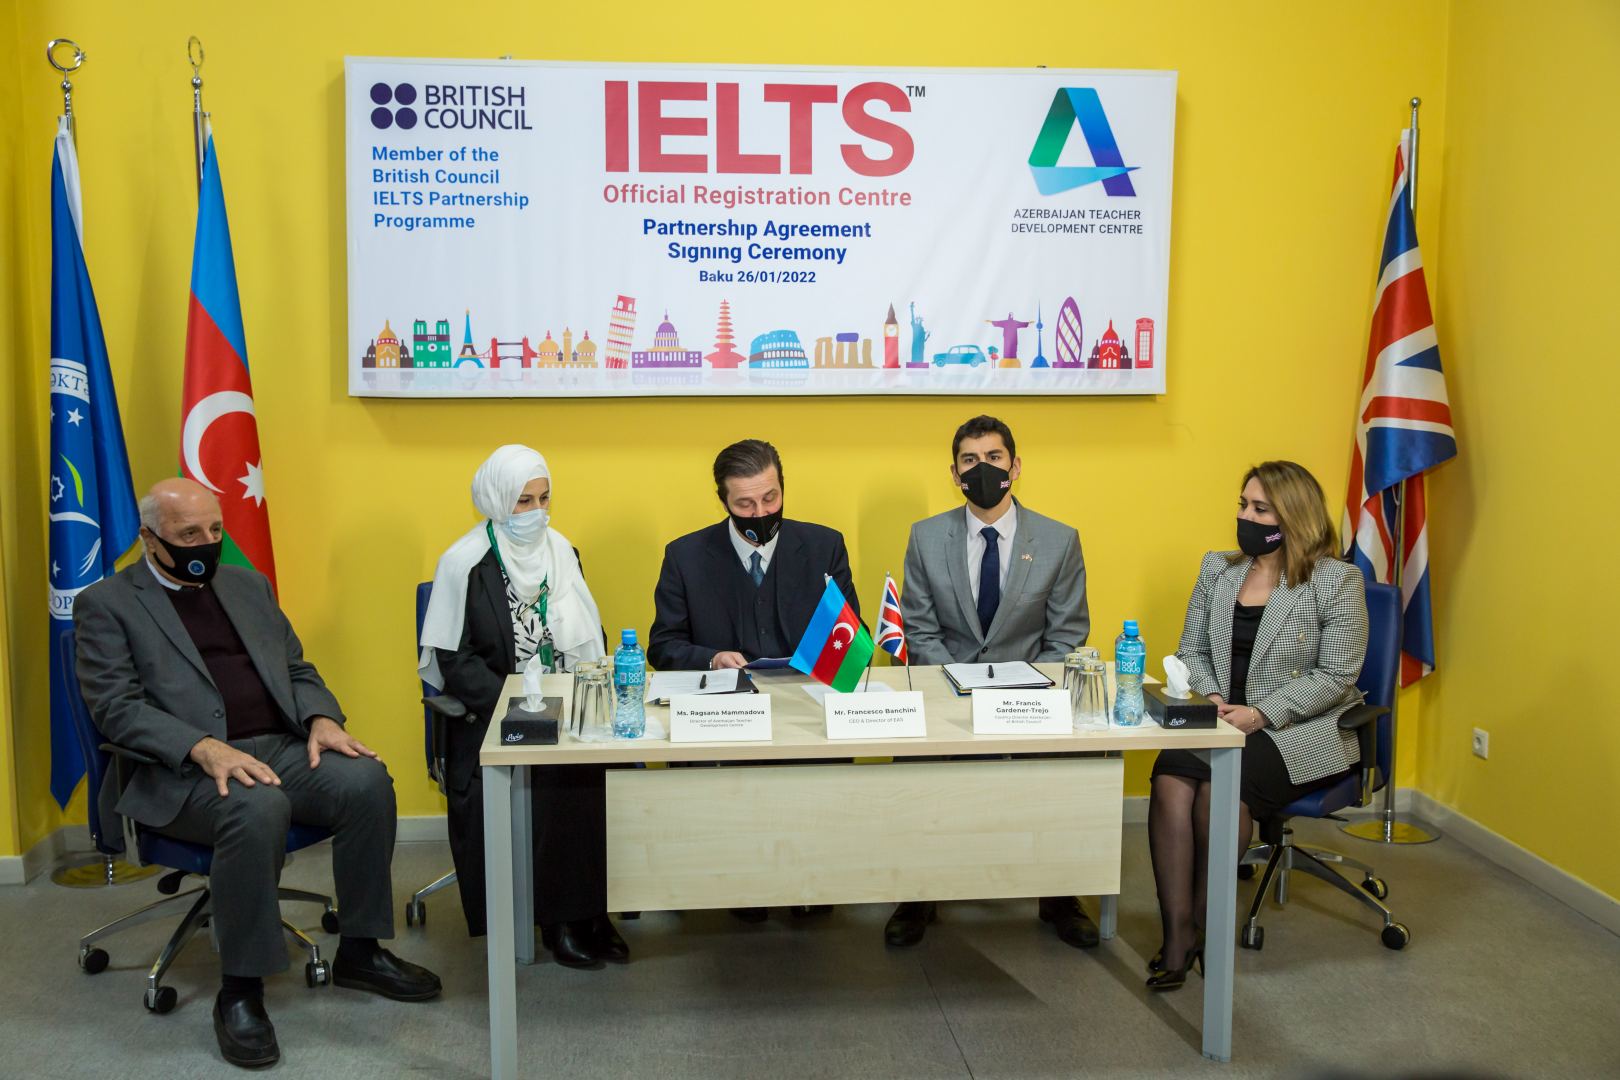 European Azerbaijan School: IELTS Registration Partnership Agreement Between British Council and Azerbaijan Teachers Development Centre was signed yesterday (PHOTO/VIDEO)